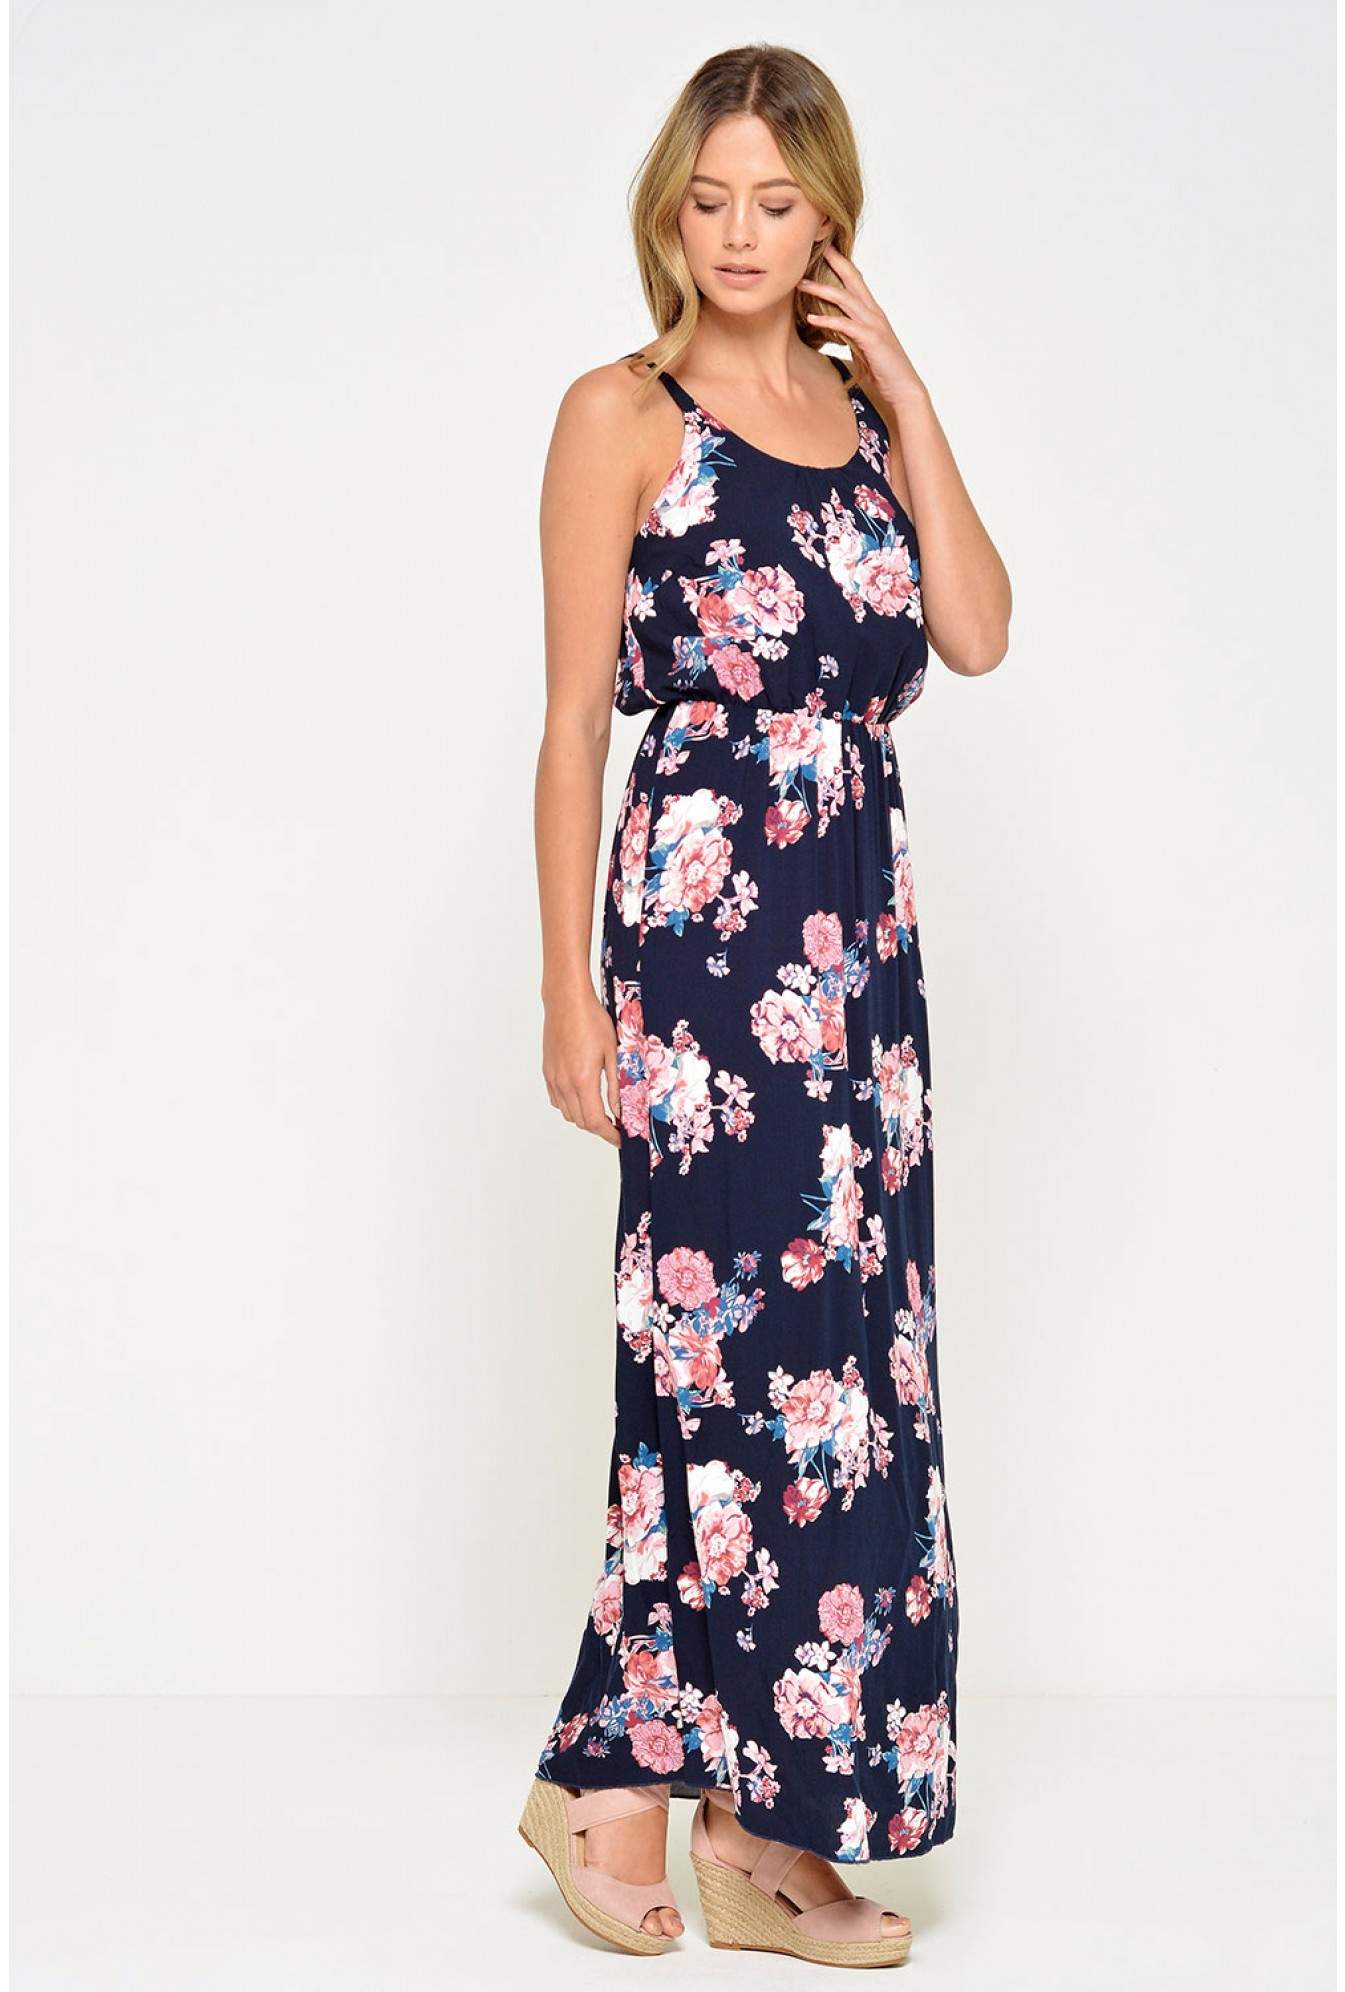 Hailys Doris Floral Print Maxi Dress in Navy | iCLOTHING